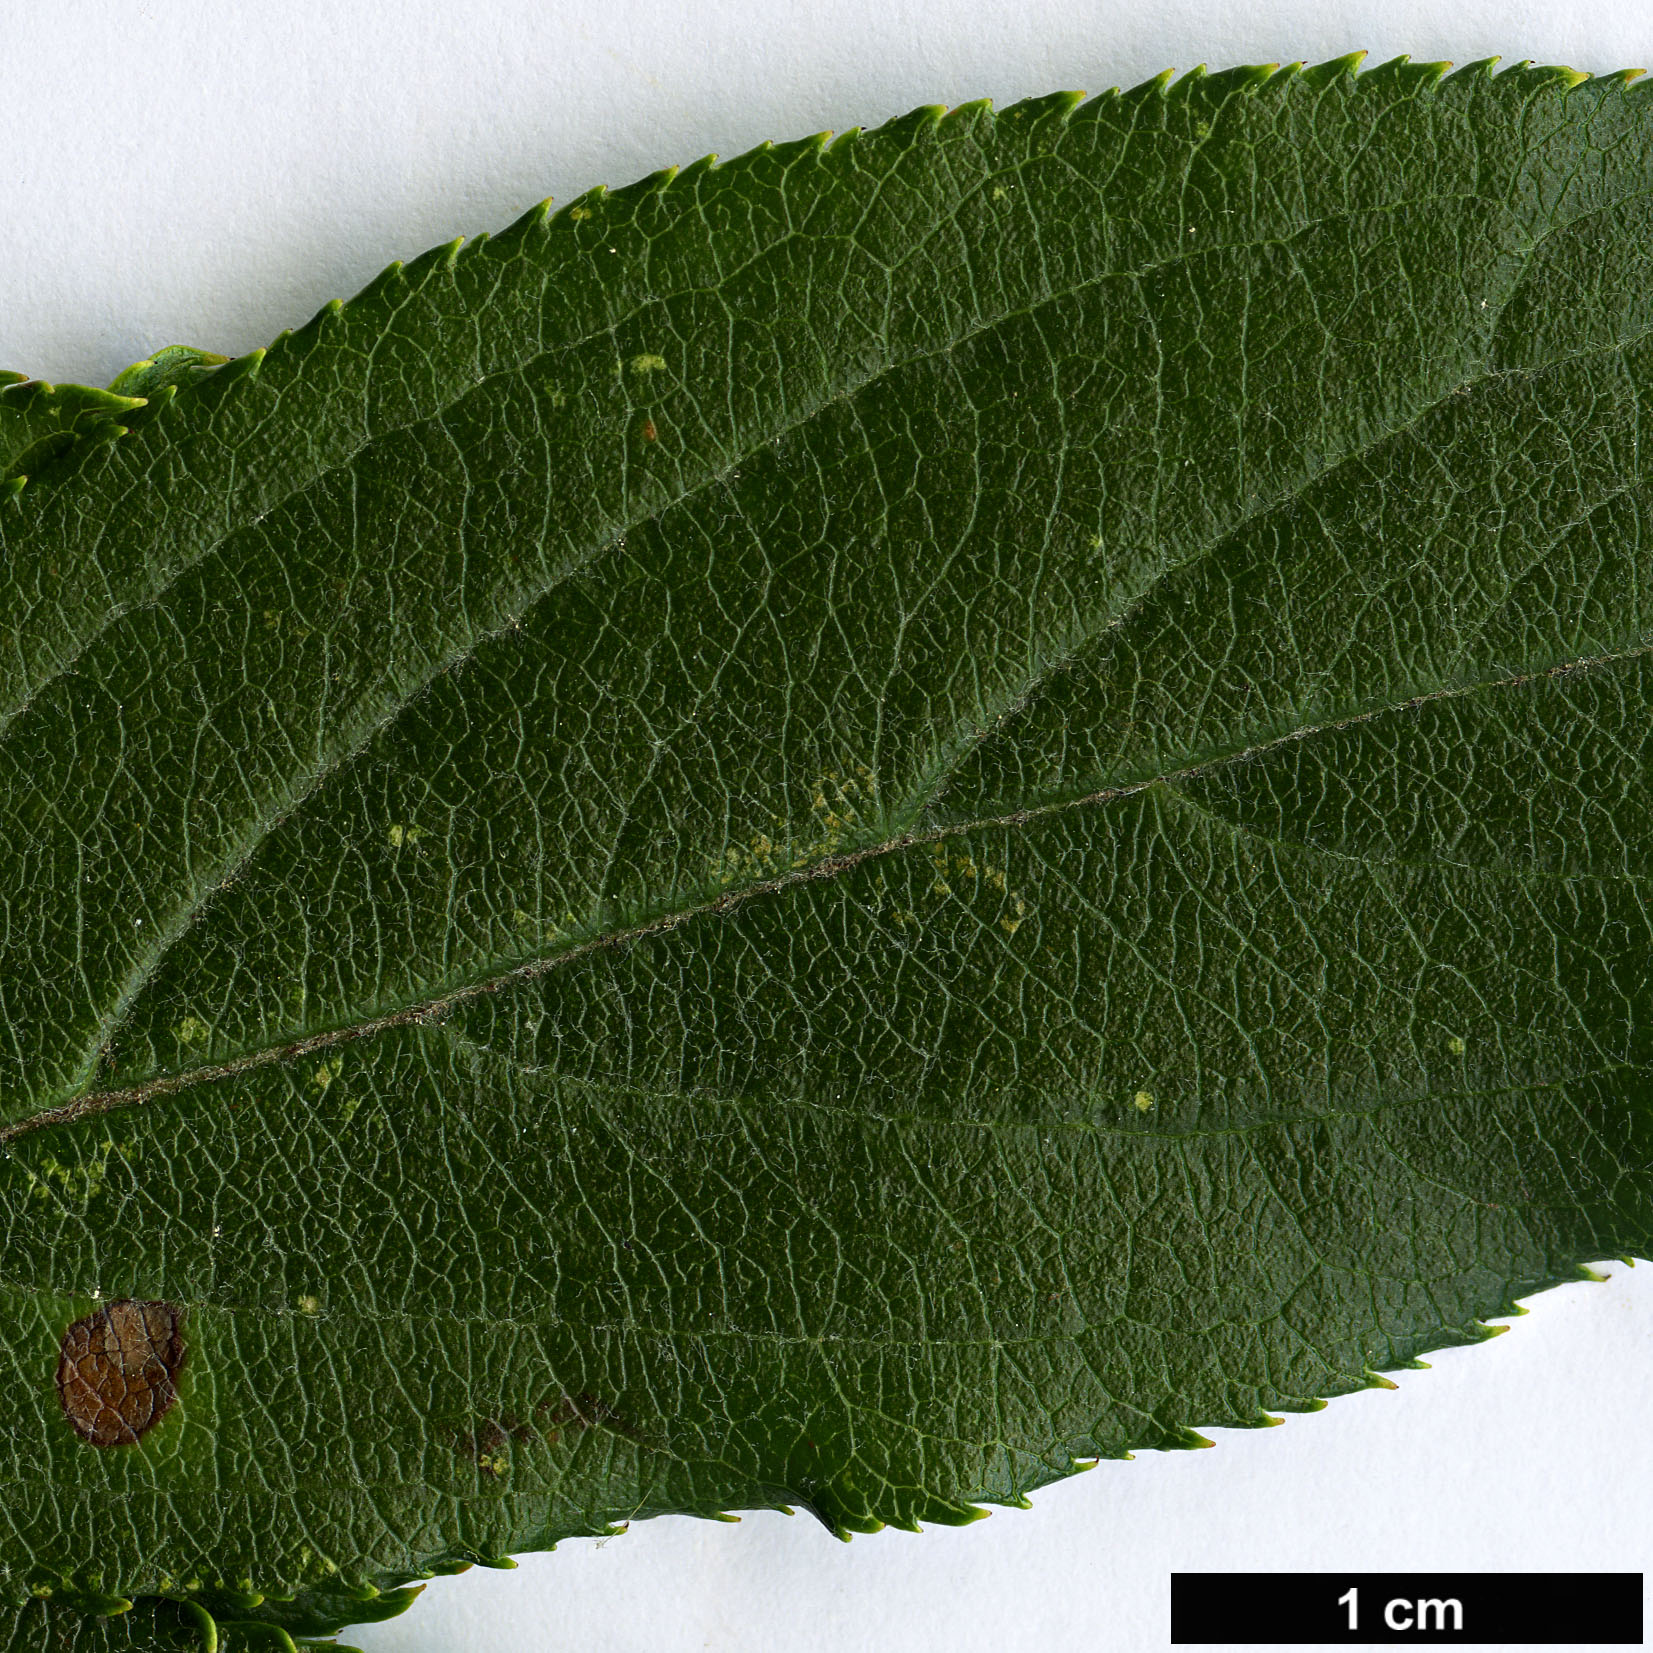 High resolution image: Family: Rosaceae - Genus: Malus - Taxon: hupehensis